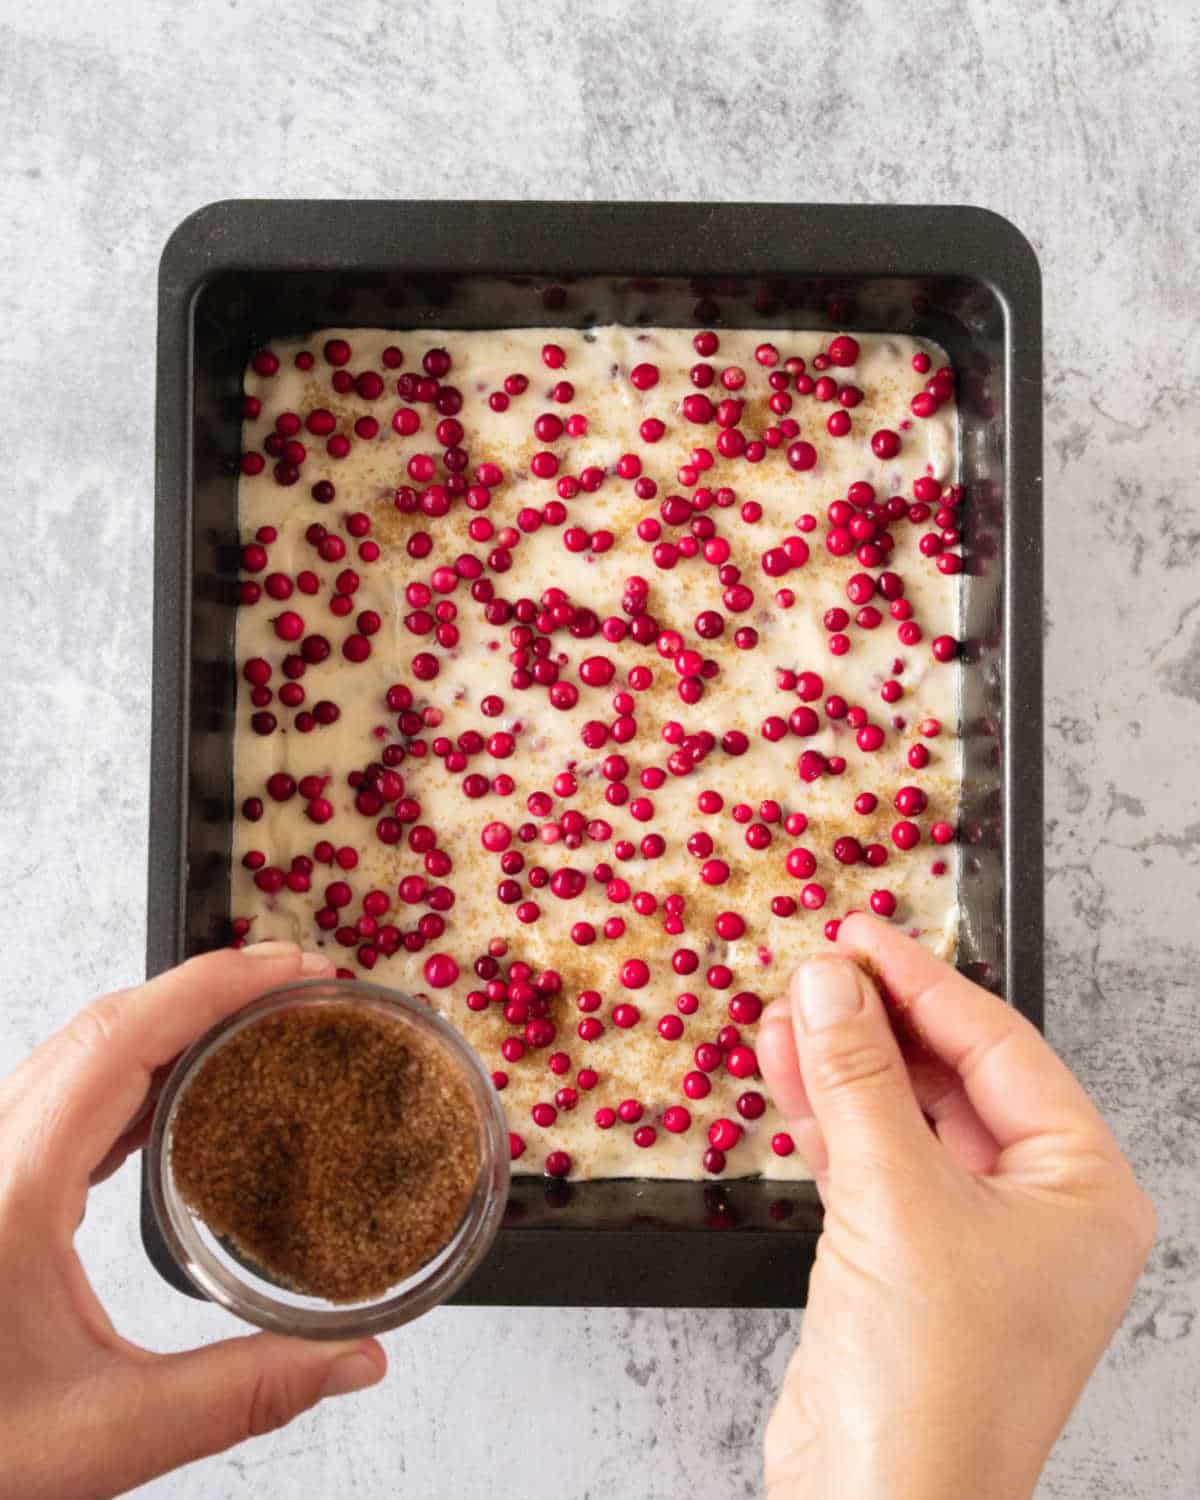 Sprinkling brown sugar on top of fresh cranberries on coffee cake batter in a metal pan. Gray surface.